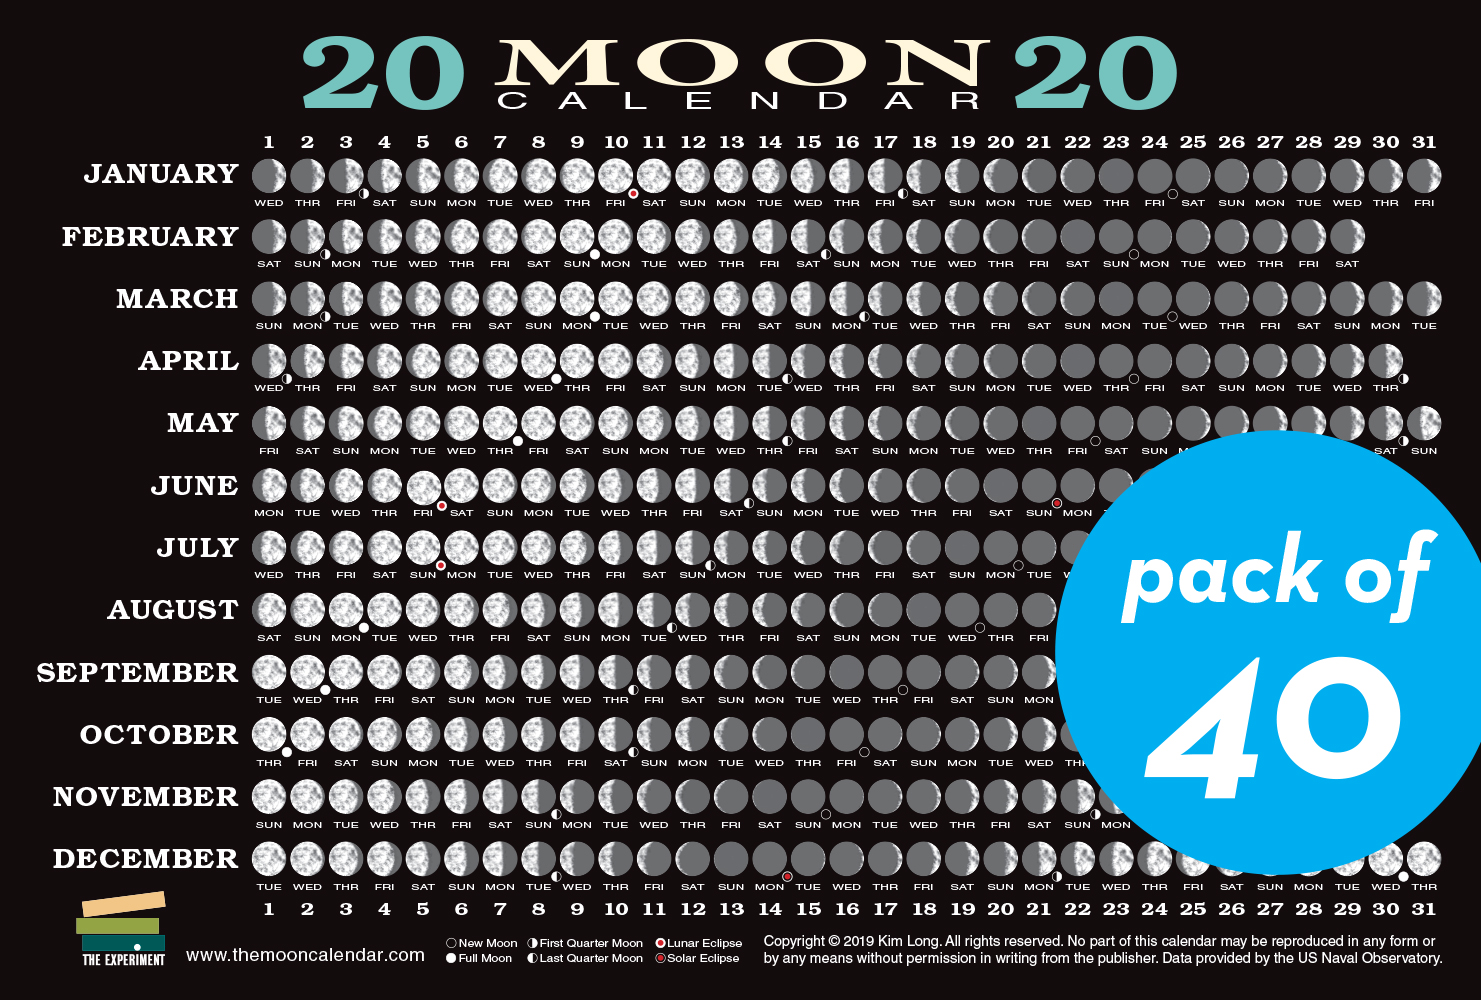 2020 Moon Calendar Card (40 pack) - Workman Publishing1481 x 1000